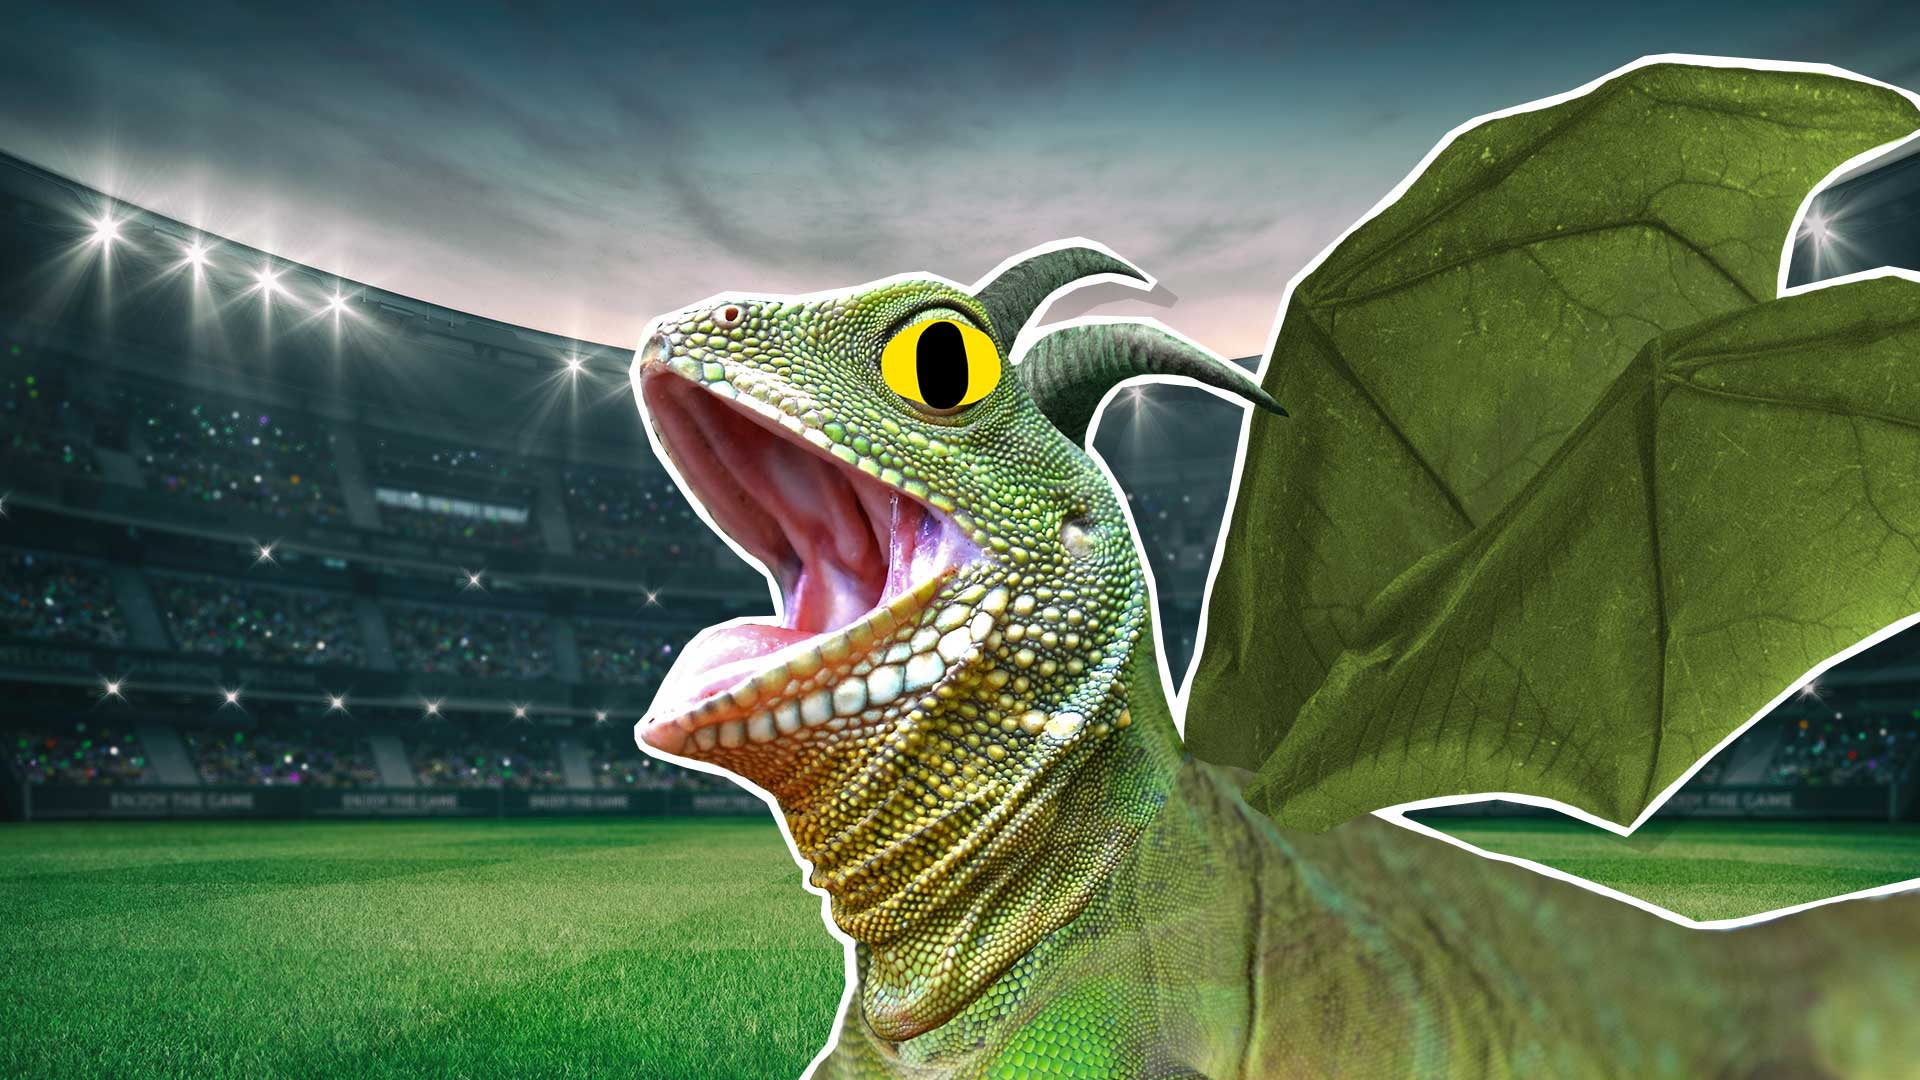 A dragon in a football stadium